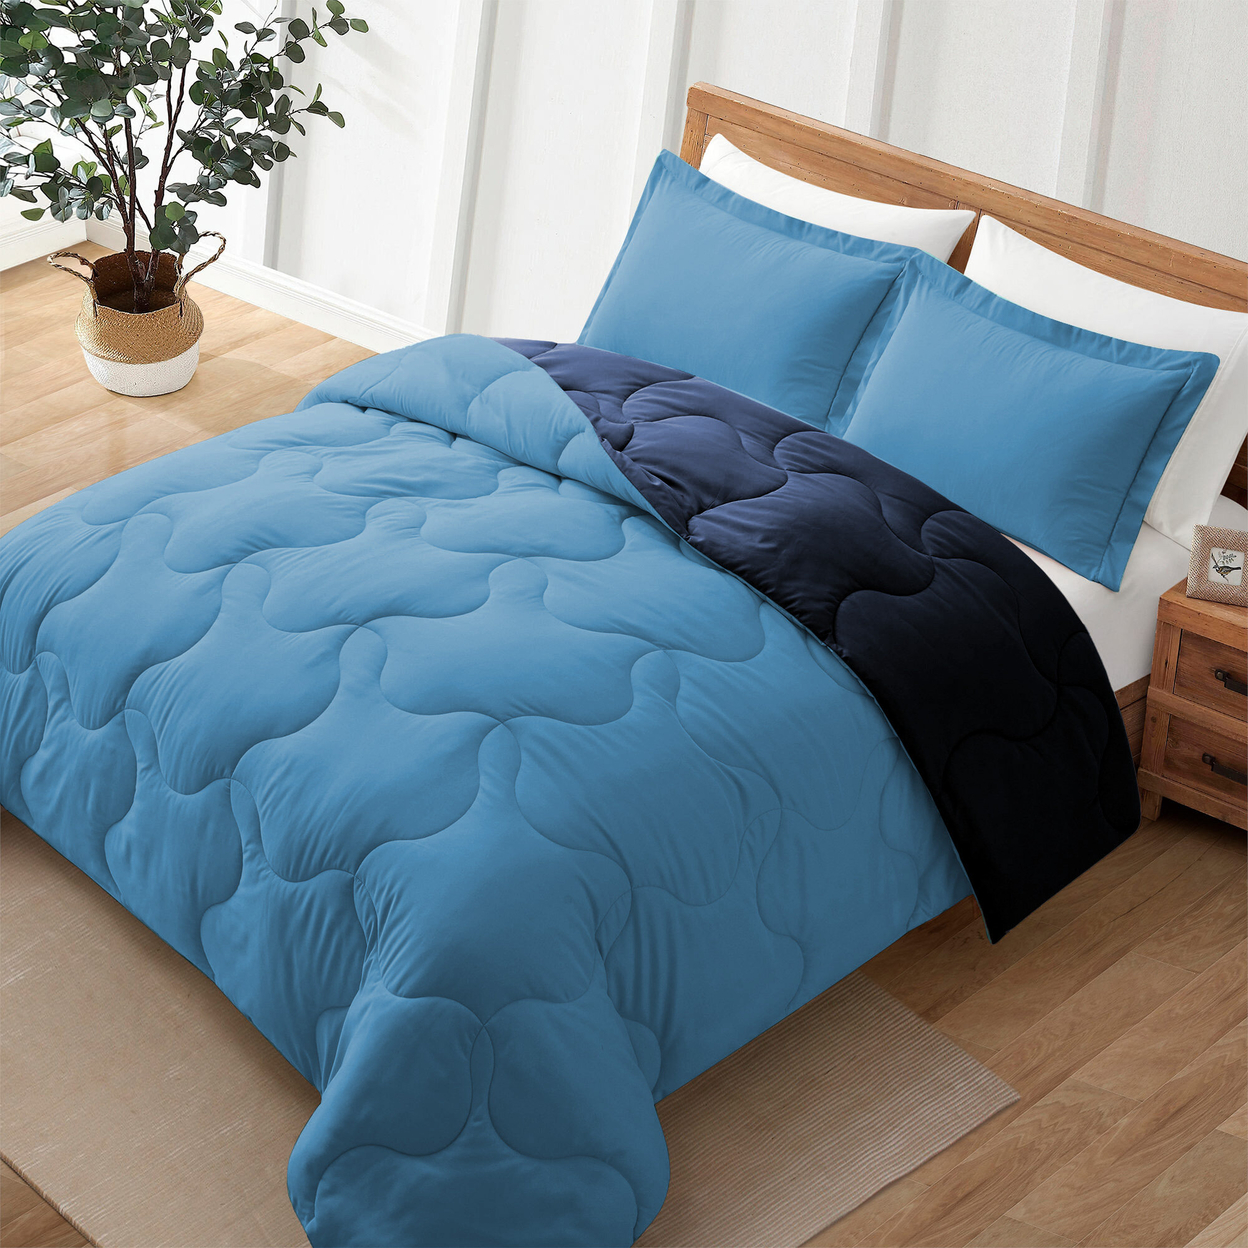 3 Or 2 Pieces Lightweight Reversible Comforter Set With Pillow Shams - Light Blue/Navy Blue, King